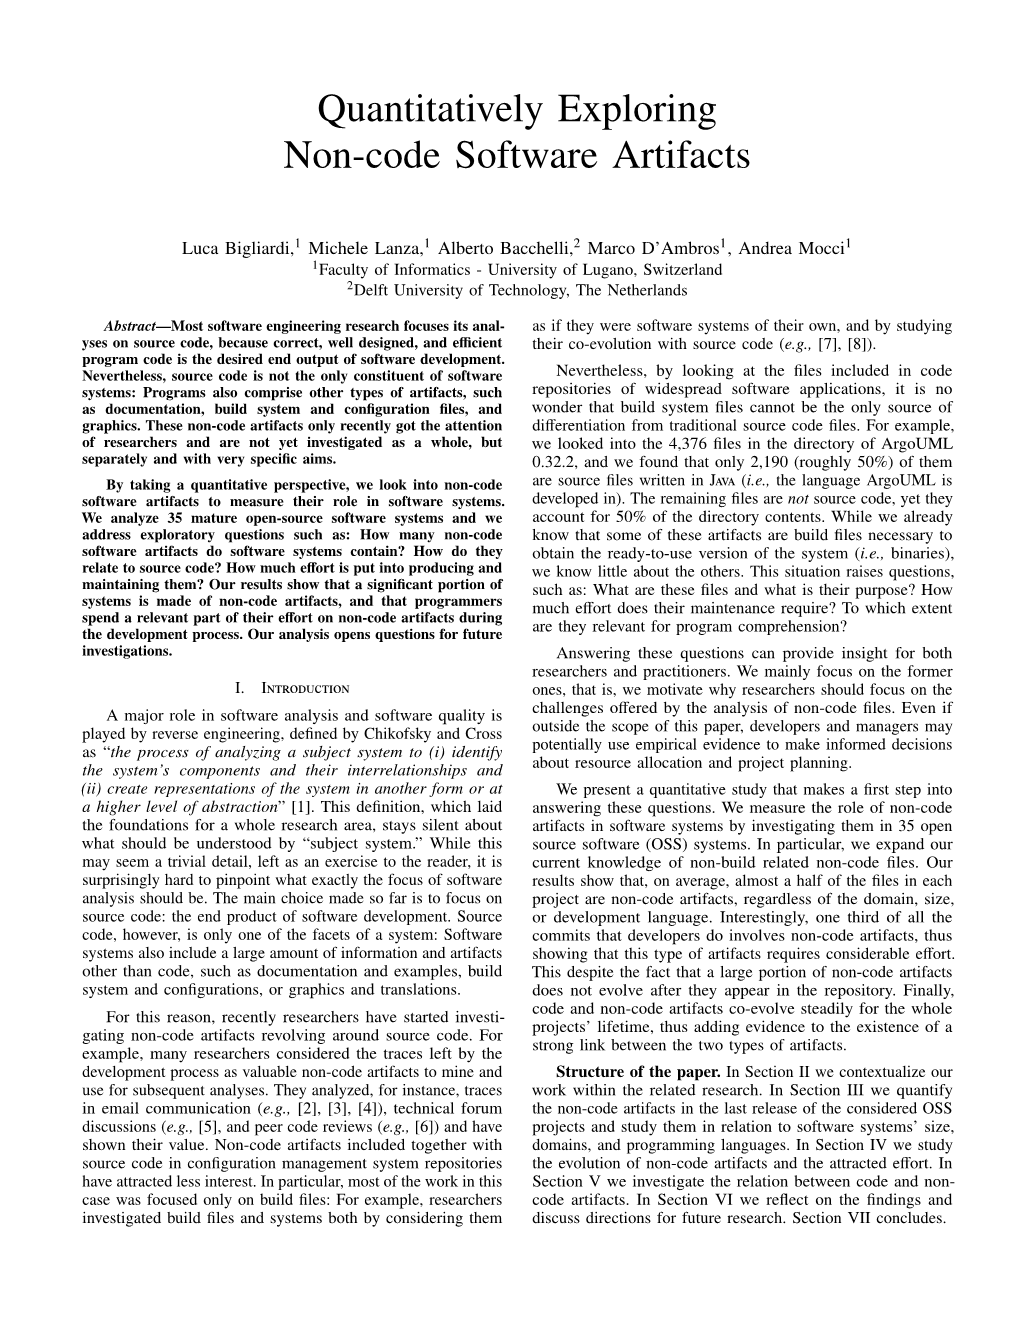 Quantitatively Exploring Non-Code Software Artifacts